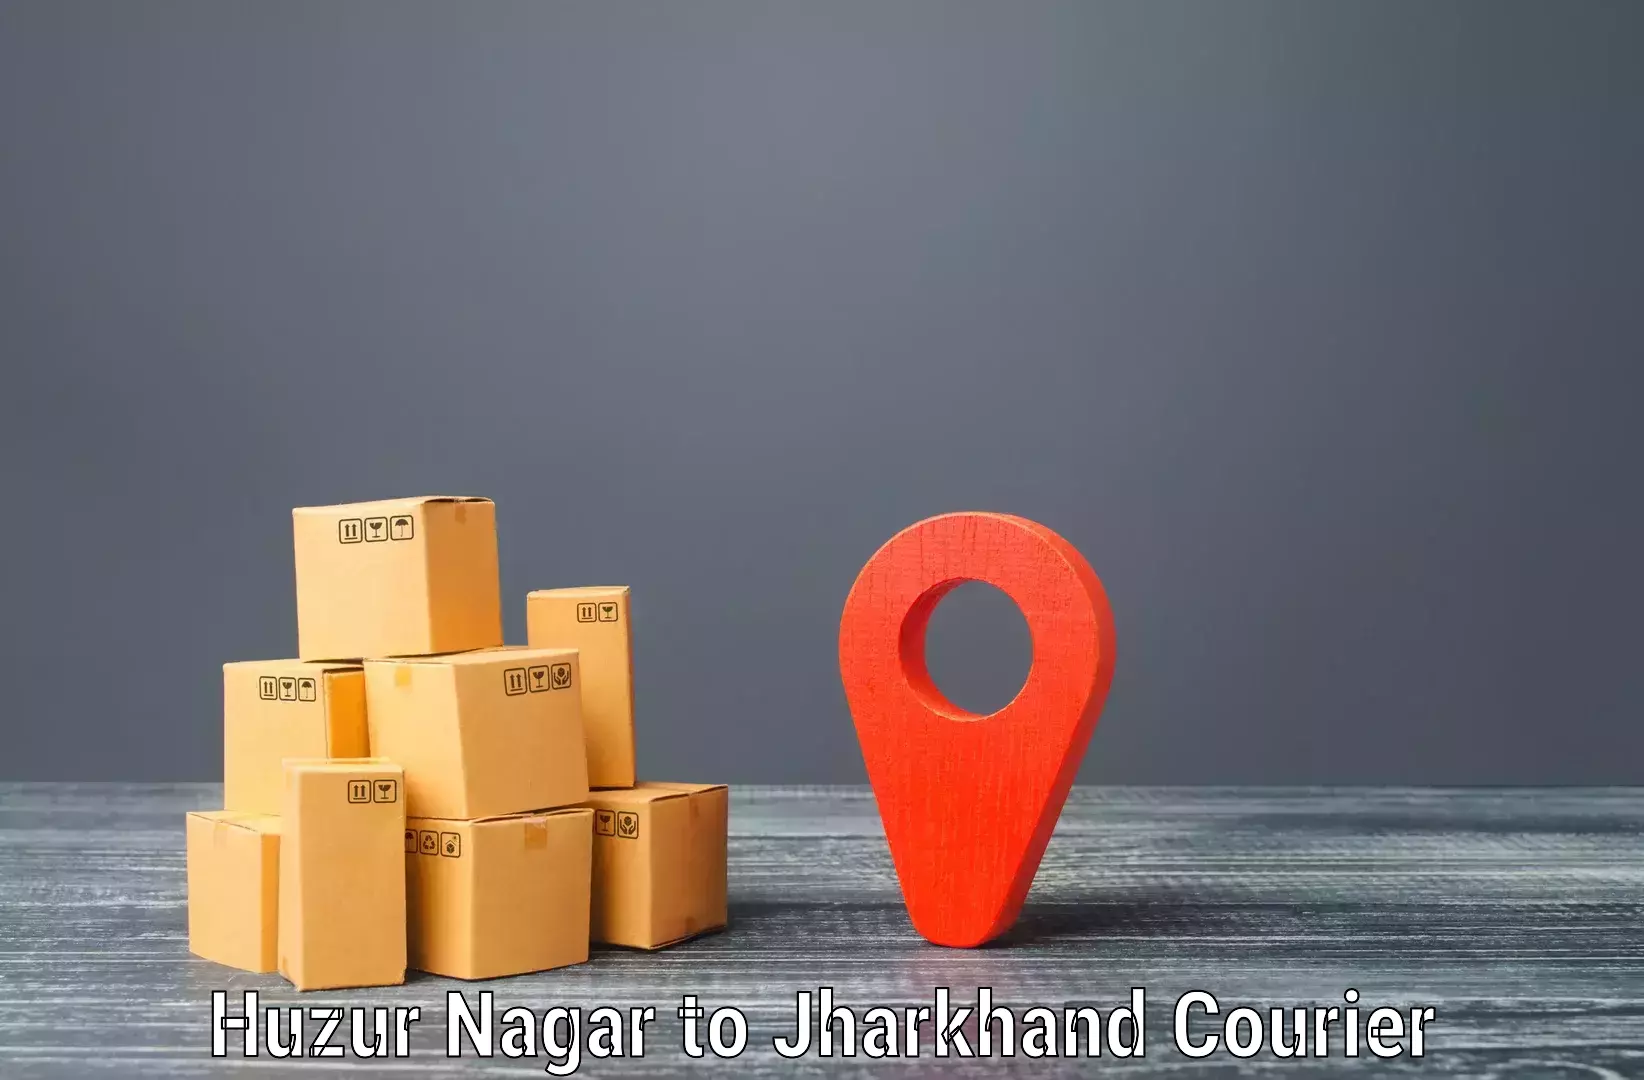 Sustainable delivery practices Huzur Nagar to Hazaribagh